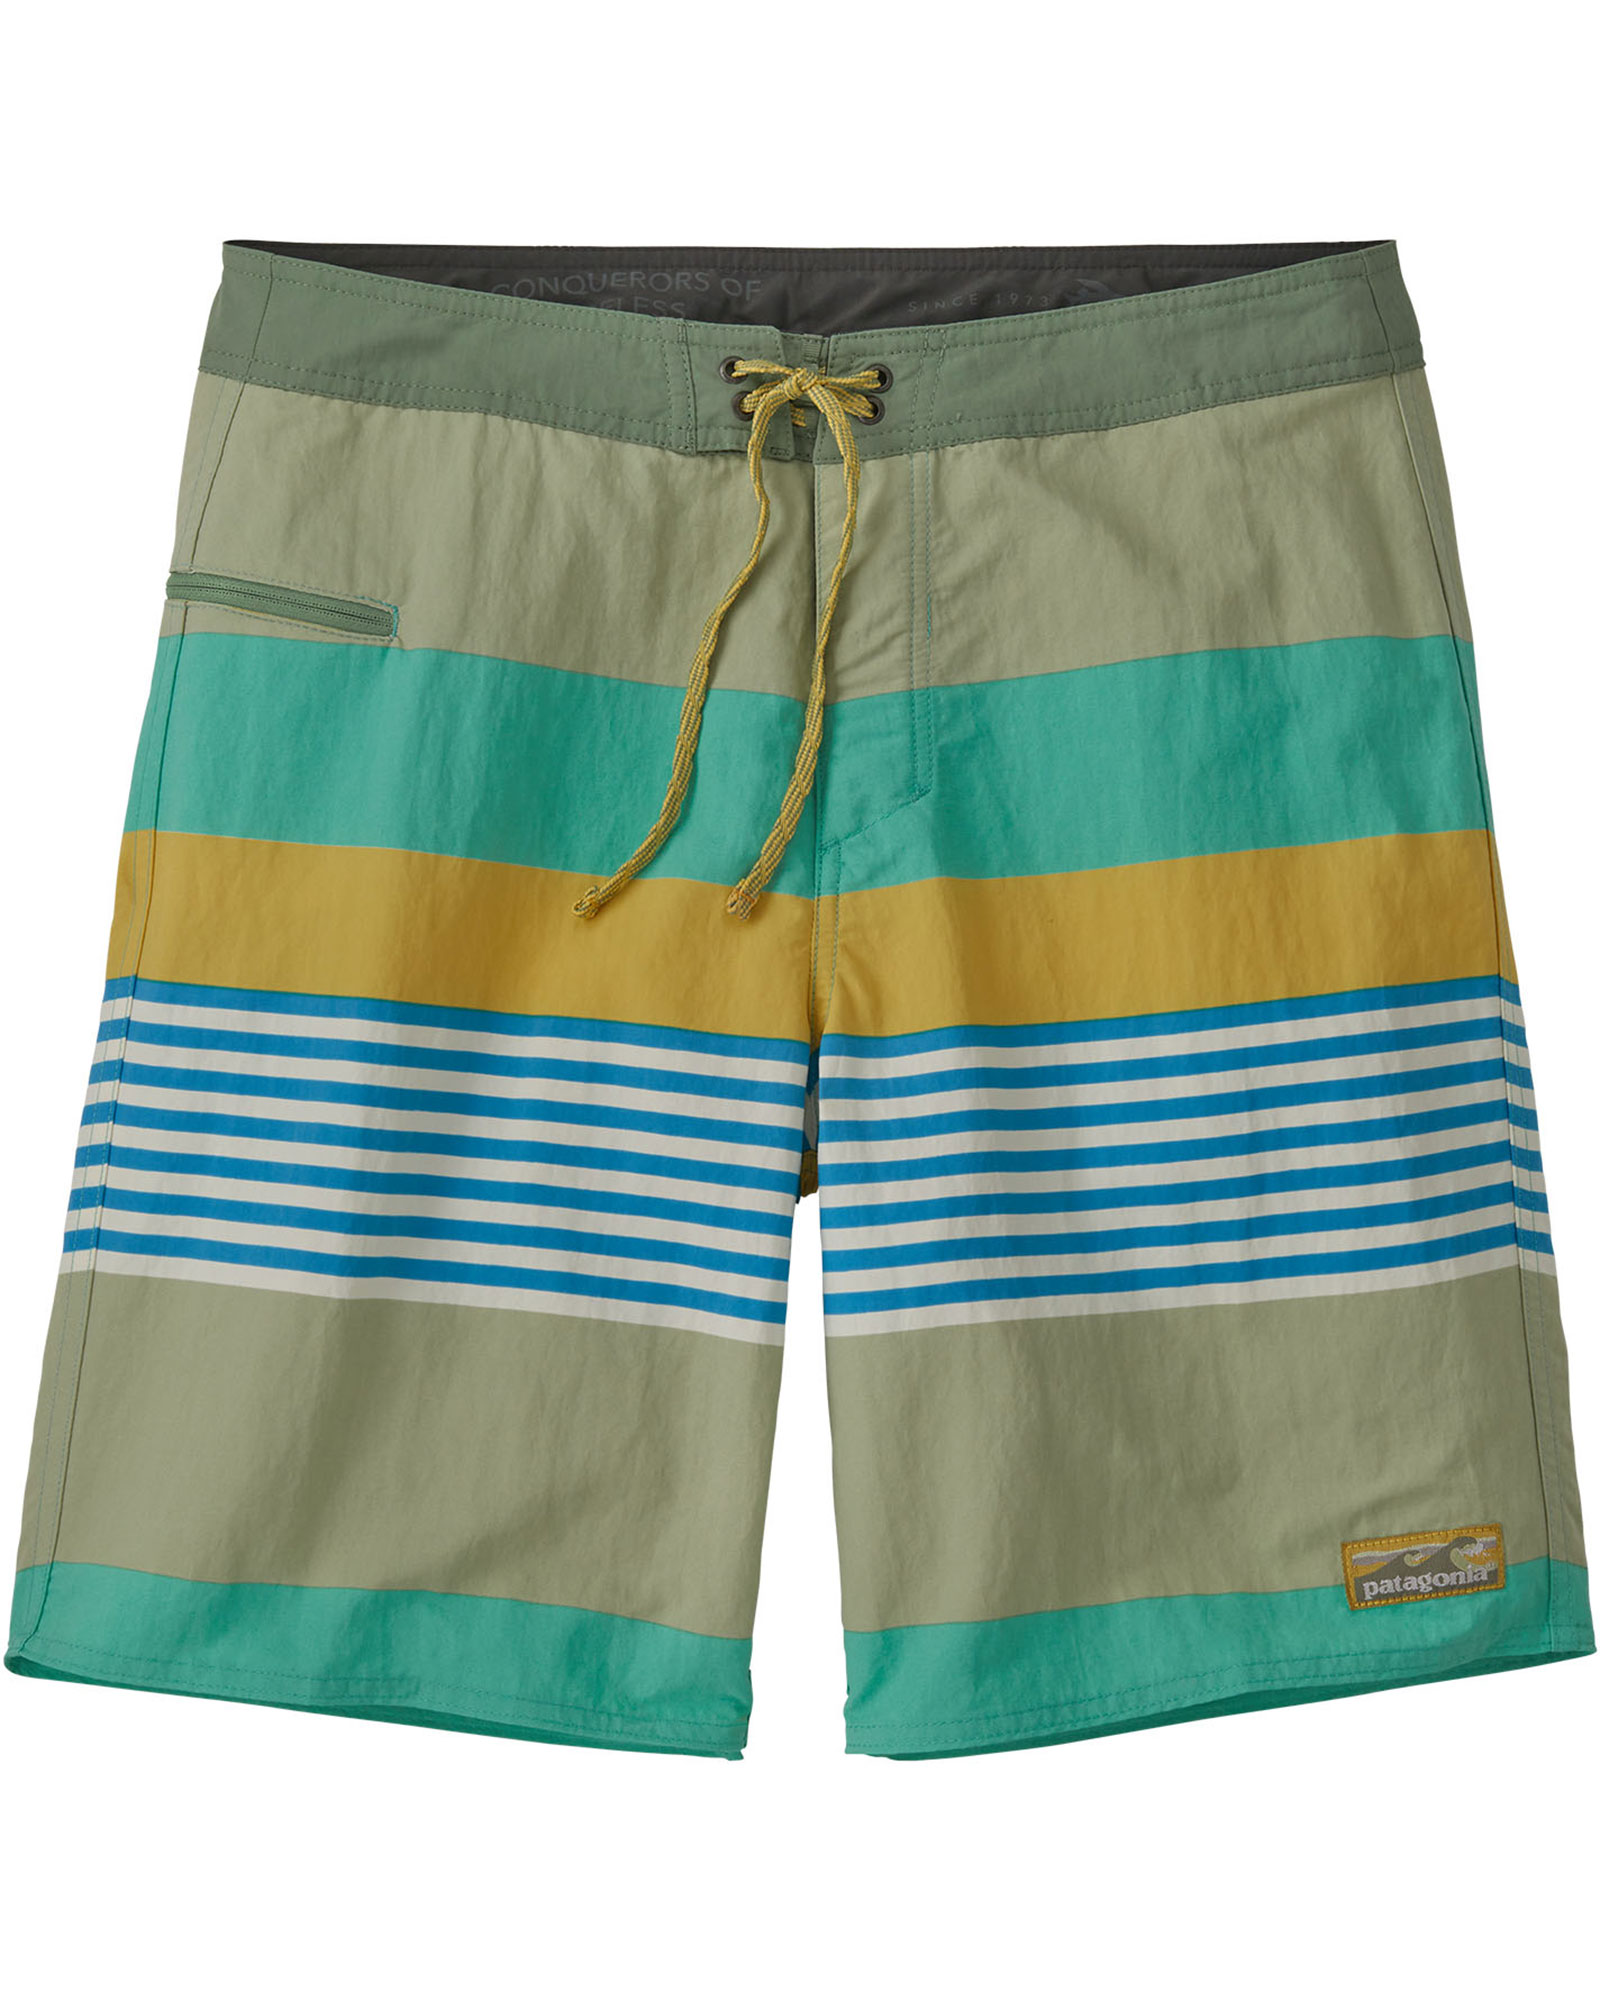 Patagonia Wavefarer Men’s 19" Board Shorts - Fitz Stripe/ Fresh Teal 34"